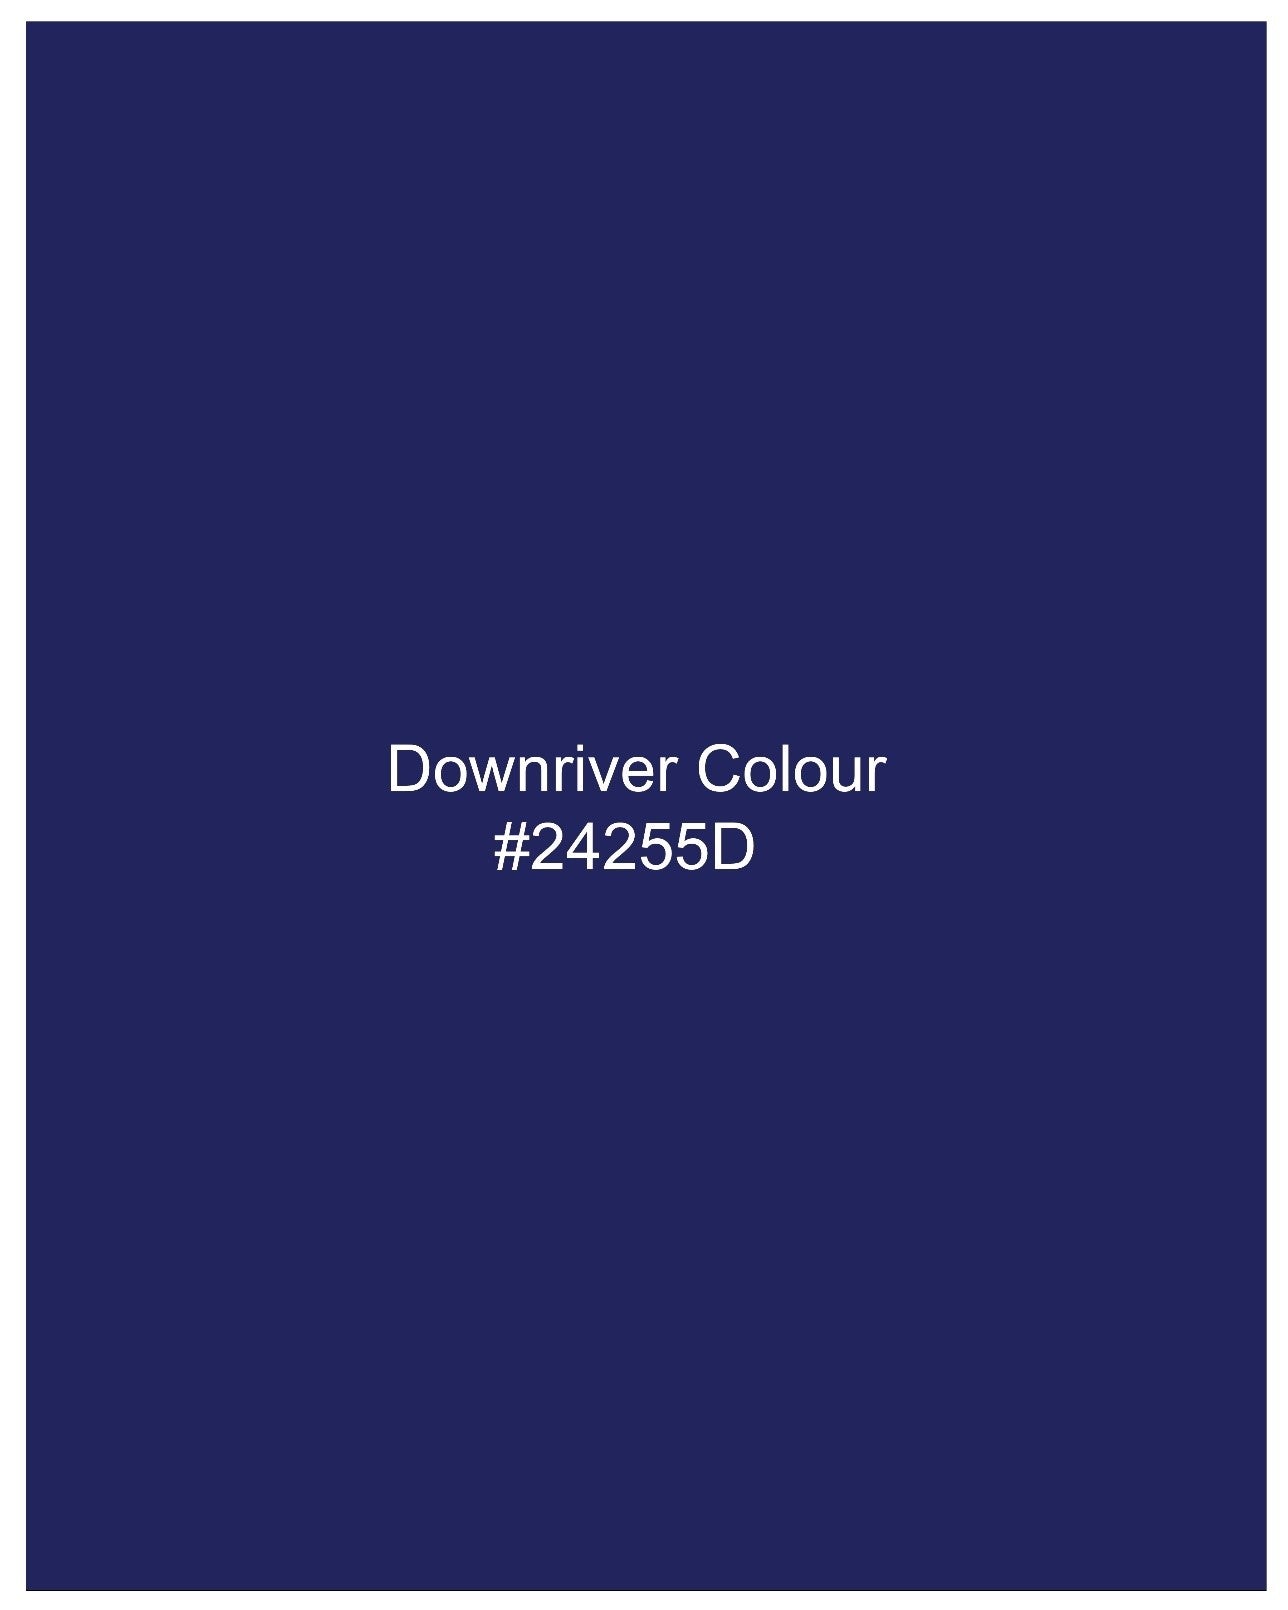 Downriver Dark Blue with Black Patch Work Above Elbow Luxurious Linen Designer Shirt 9900-CP-P129-38, 9900-CP-P129-H-38, 9900-CP-P129-39, 9900-CP-P129-H-39, 9900-CP-P129-40, 9900-CP-P129-H-40, 9900-CP-P129-42, 9900-CP-P129-H-42, 9900-CP-P129-44, 9900-CP-P129-H-44, 9900-CP-P129-46, 9900-CP-P129-H-46, 9900-CP-P129-48, 9900-CP-P129-H-48, 9900-CP-P129-50, 9900-CP-P129-H-50, 9900-CP-P129-52, 9900-CP-P129-H-52